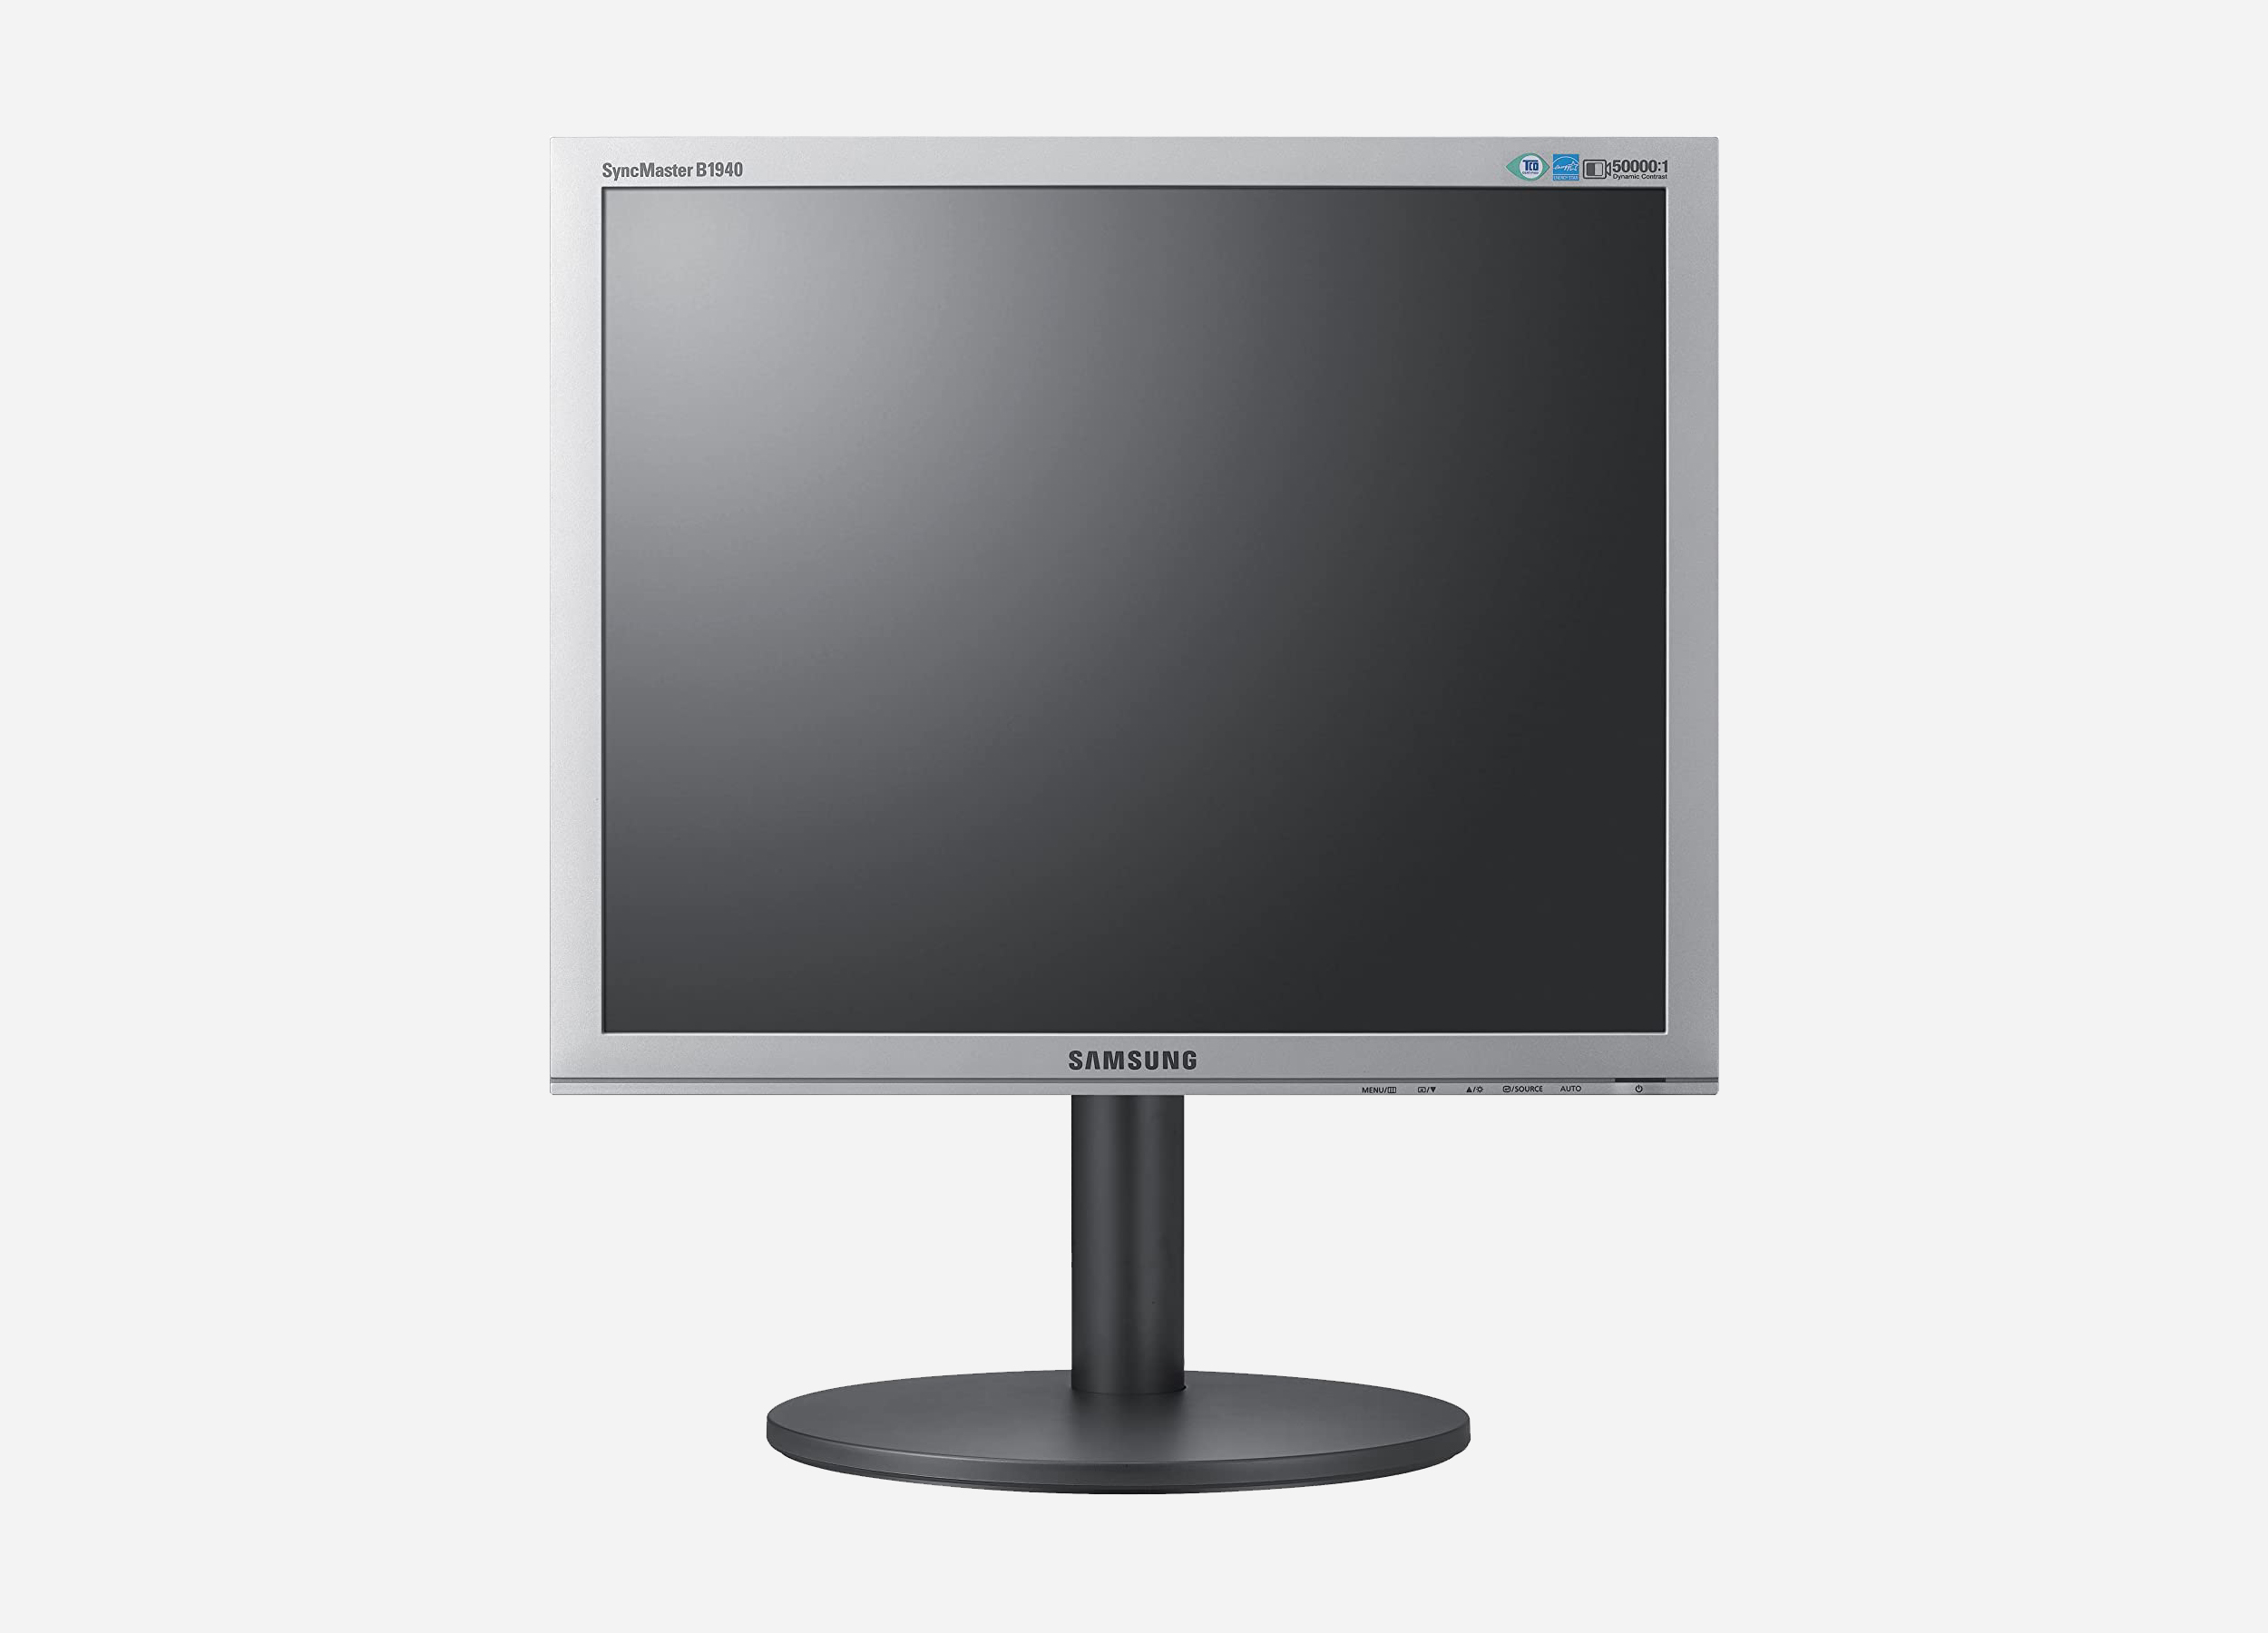 Samsung SyncMaster B1940W - LCD monitor - 19